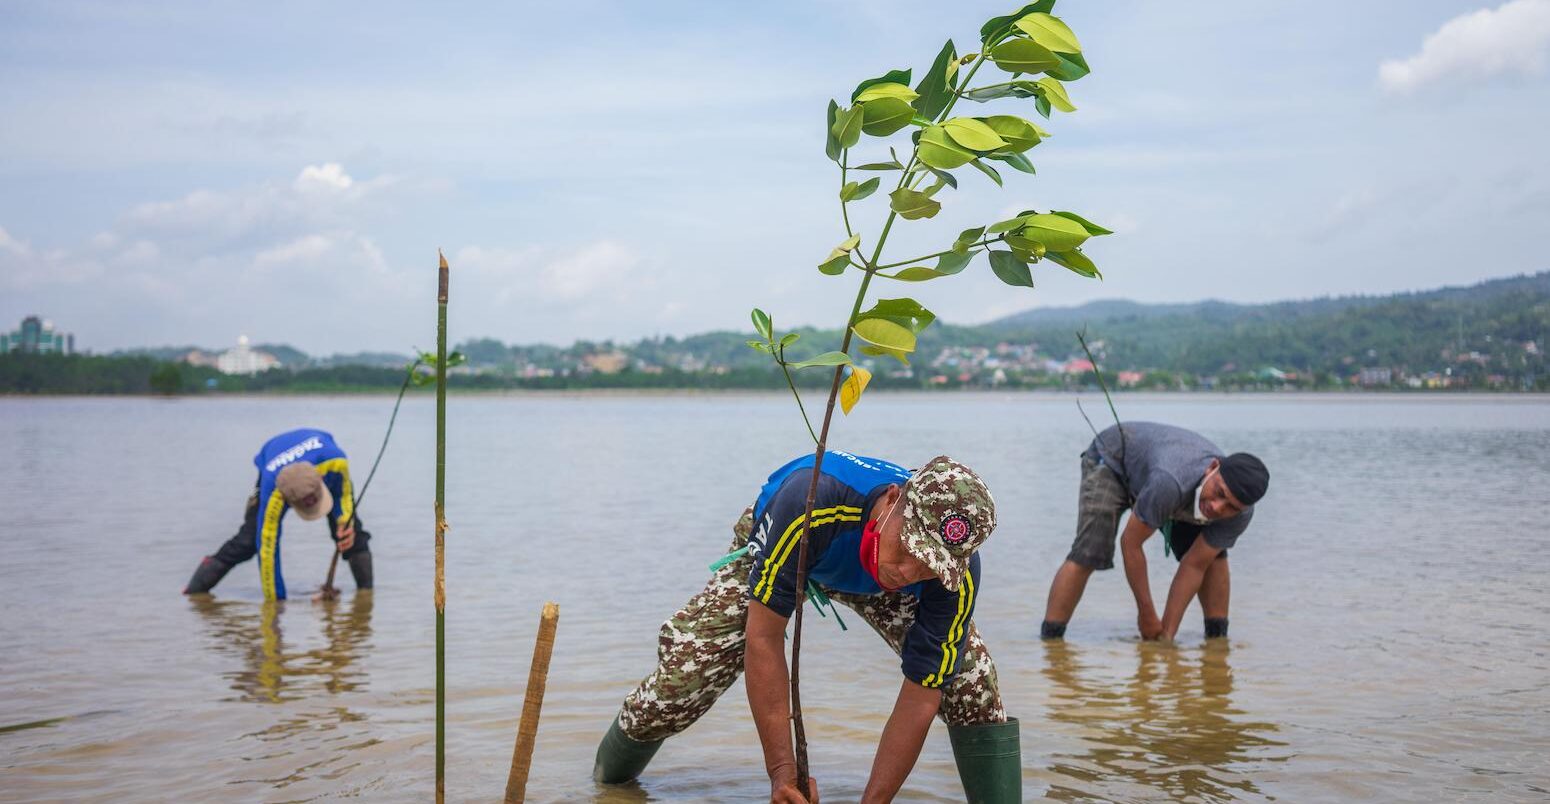 Men plant mangrove seedlings in Kendari, Indonesia on 18 February 2021. Credit: Alamy Stock Photo